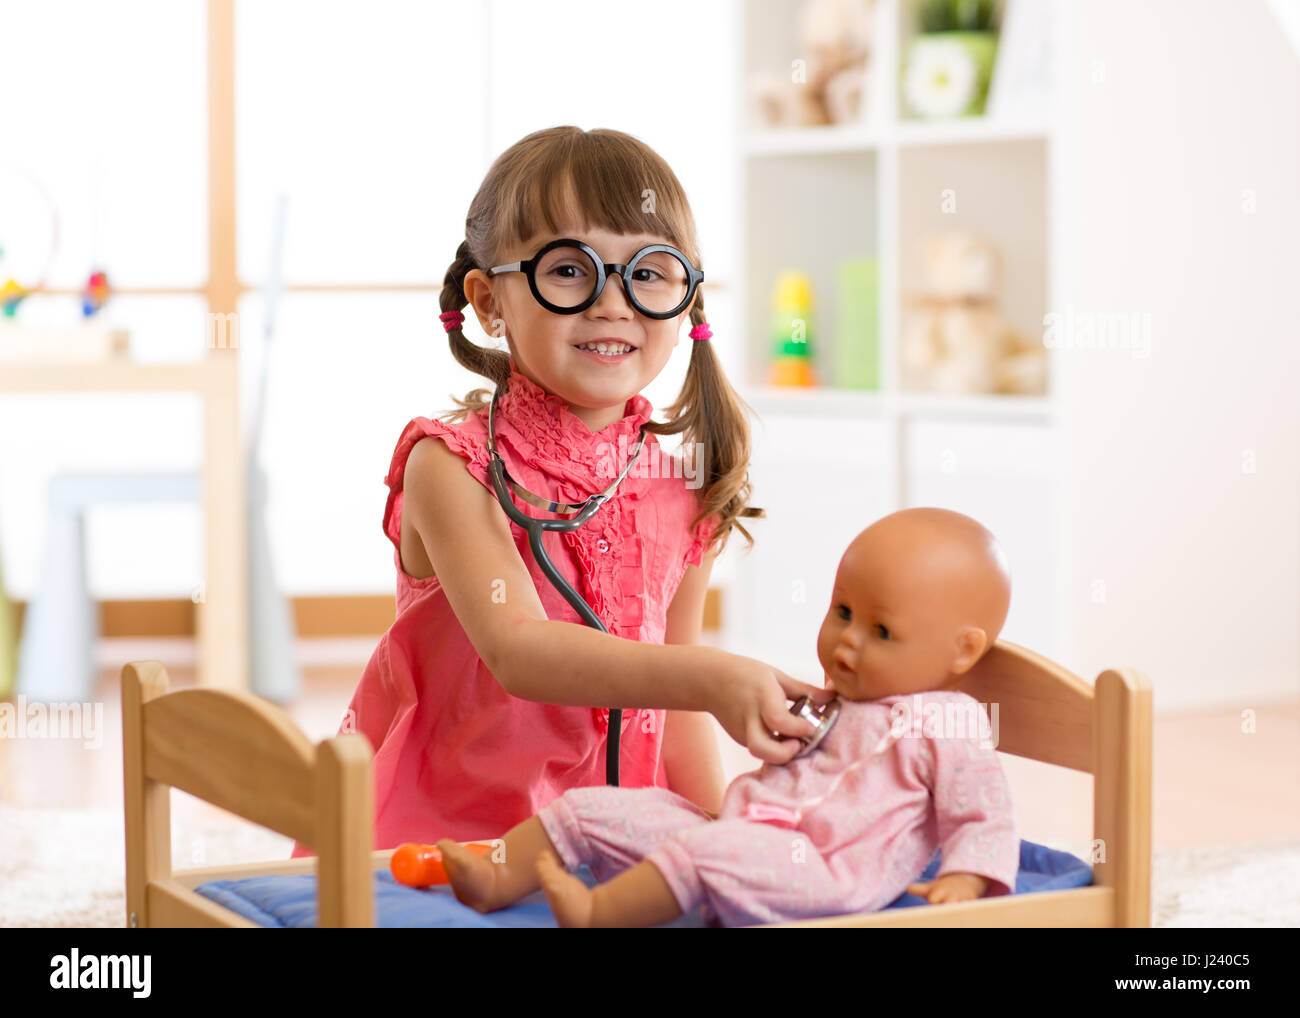 Child in kindergarten. Kid in nursery school. Little girl playing doctor with doll Stock Photo